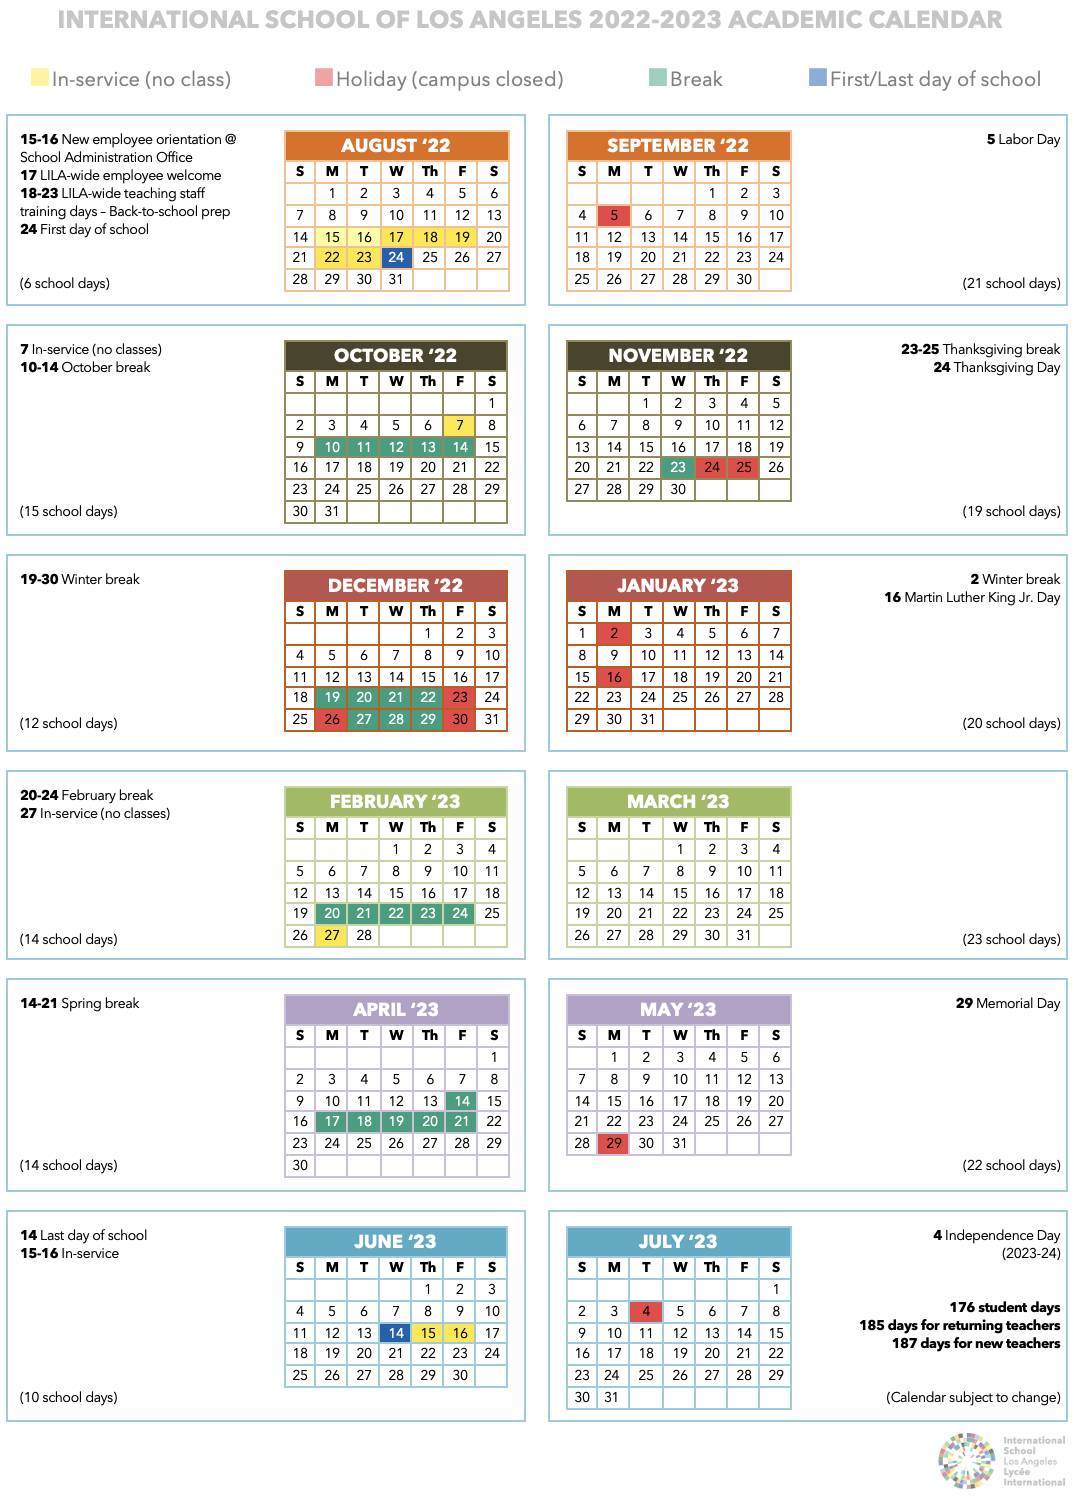 Ucr Fall 2022 Calendar Calendar | International School Of Los Angeles